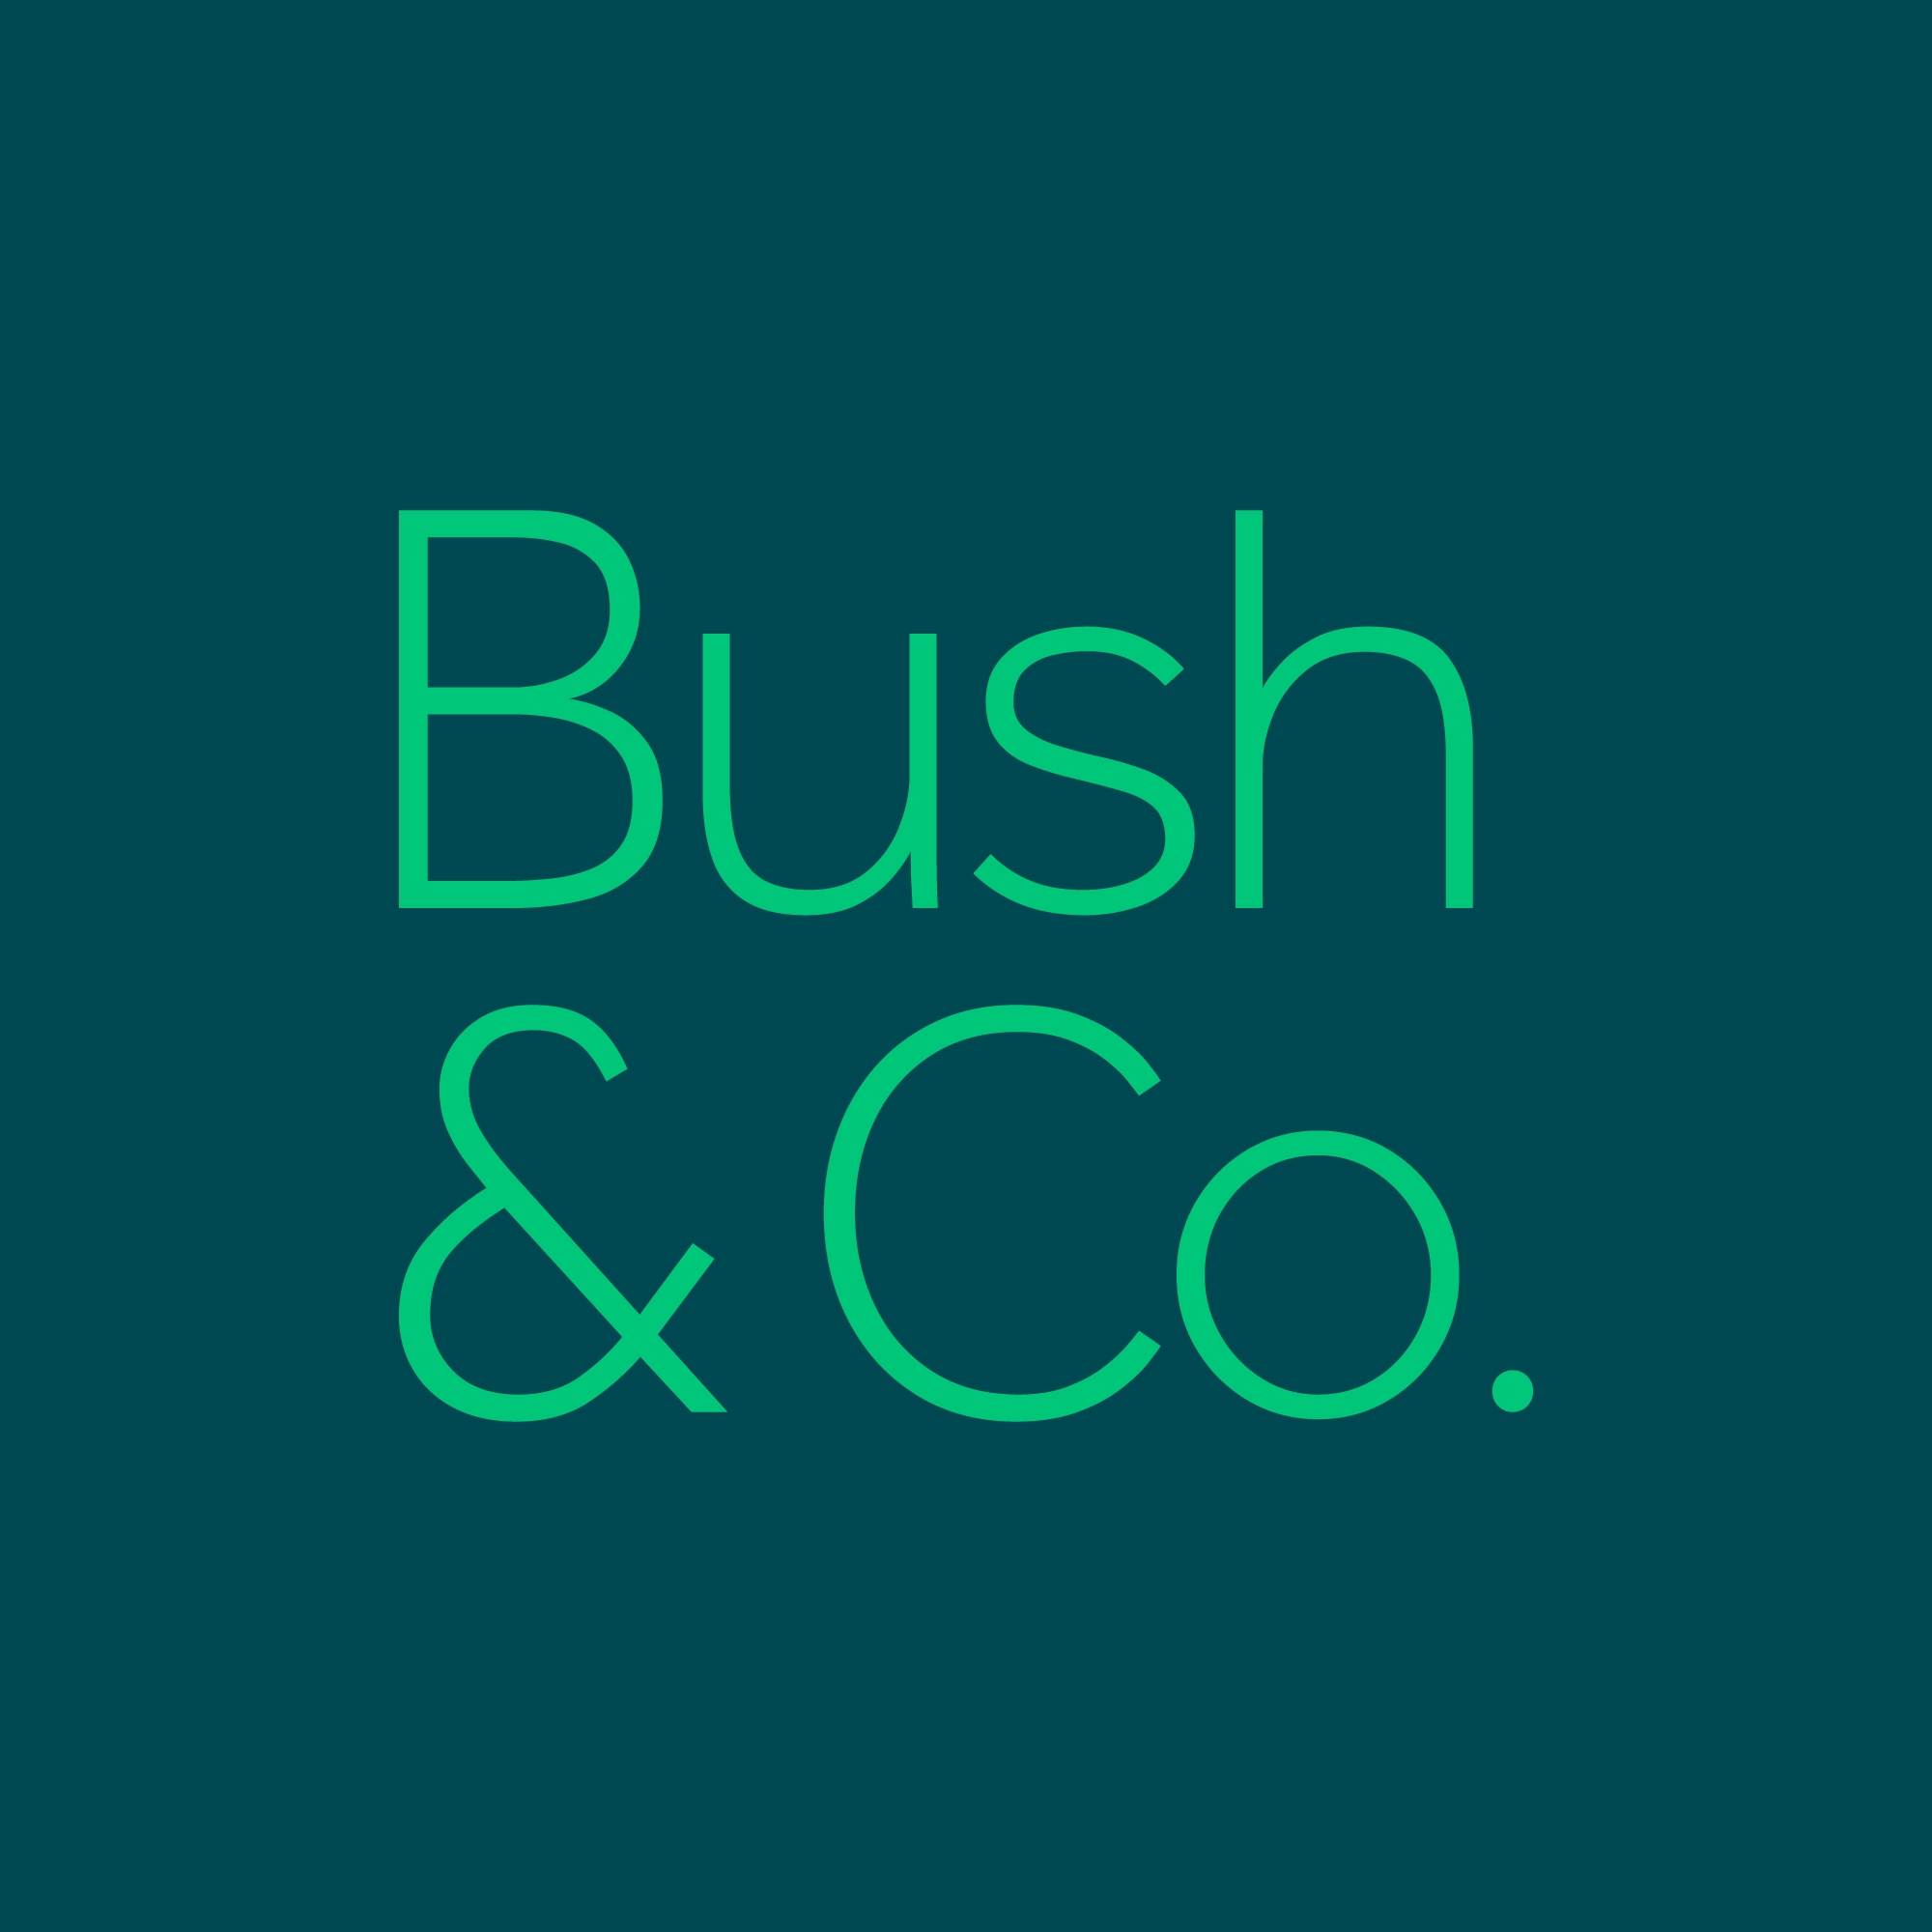 Bush & Co